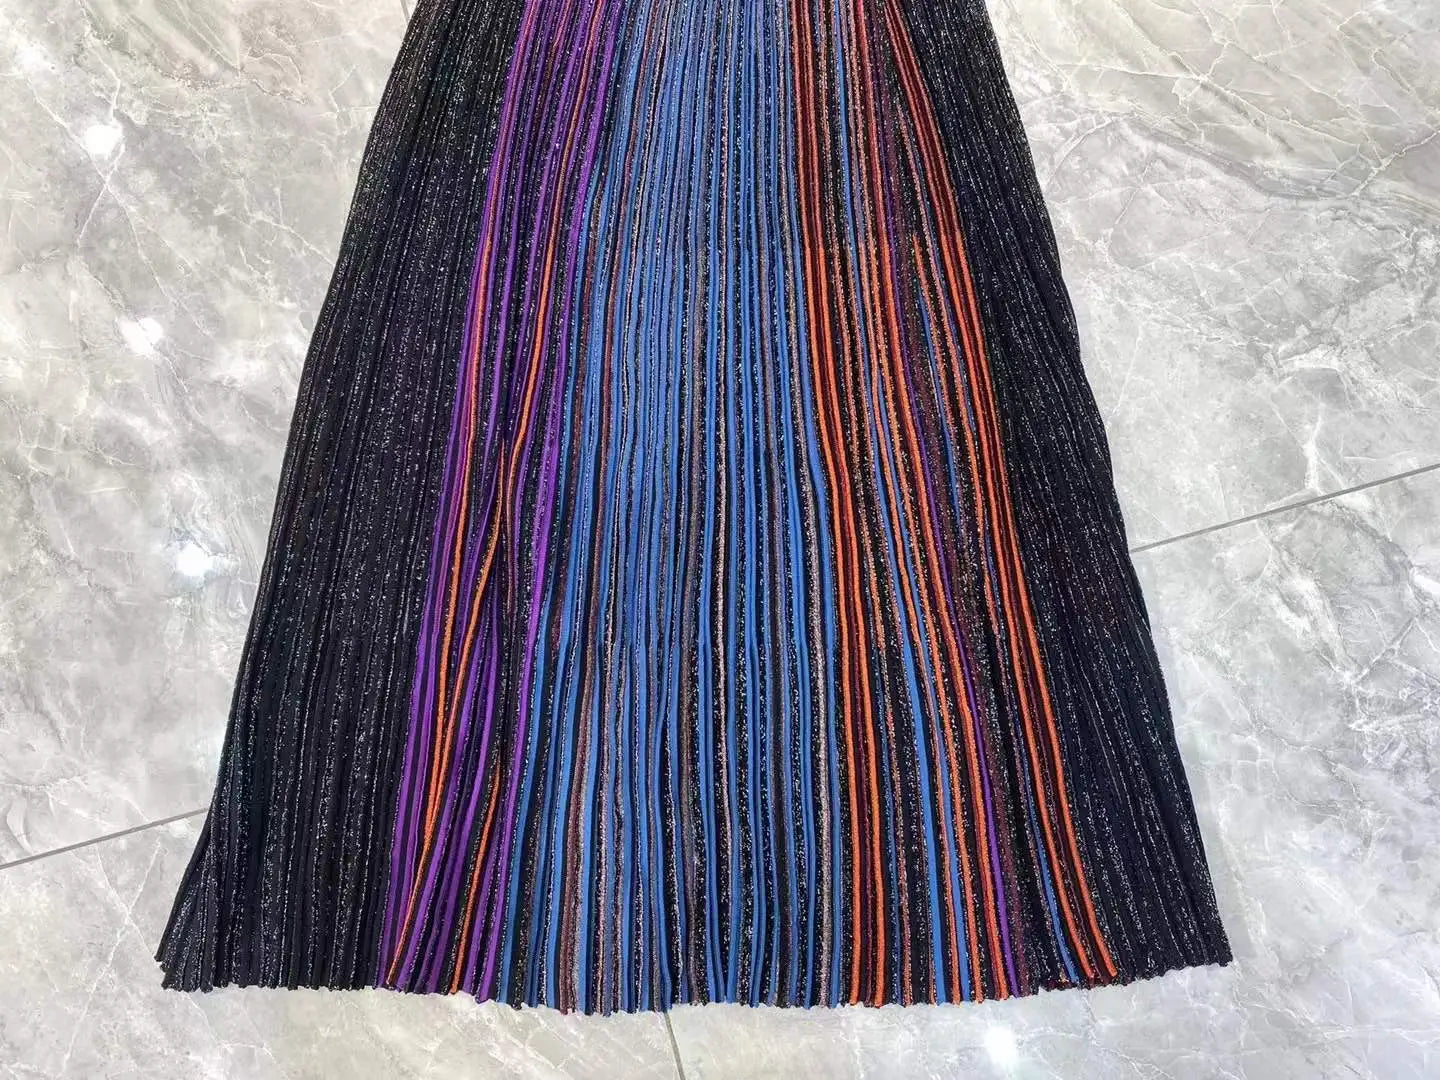 Rainbow Contrast Dress V-Neck Slim Fit Elegant Thin Gold Thread Maxi Dress